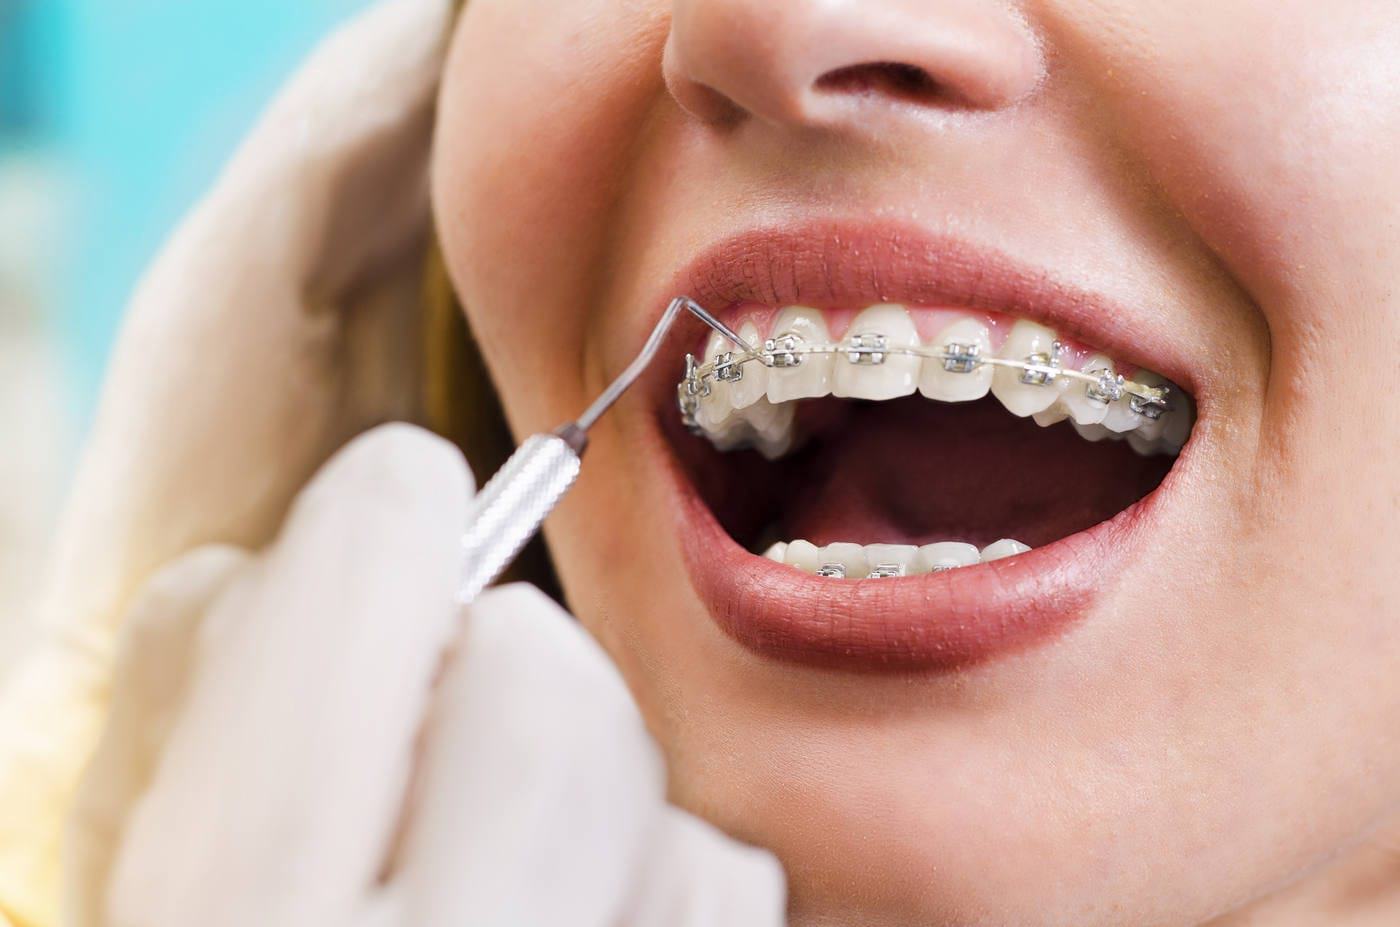 Aparat dentar metalic sau aparat dentar ceramic? Afla care sunt diferentele dintre ele!